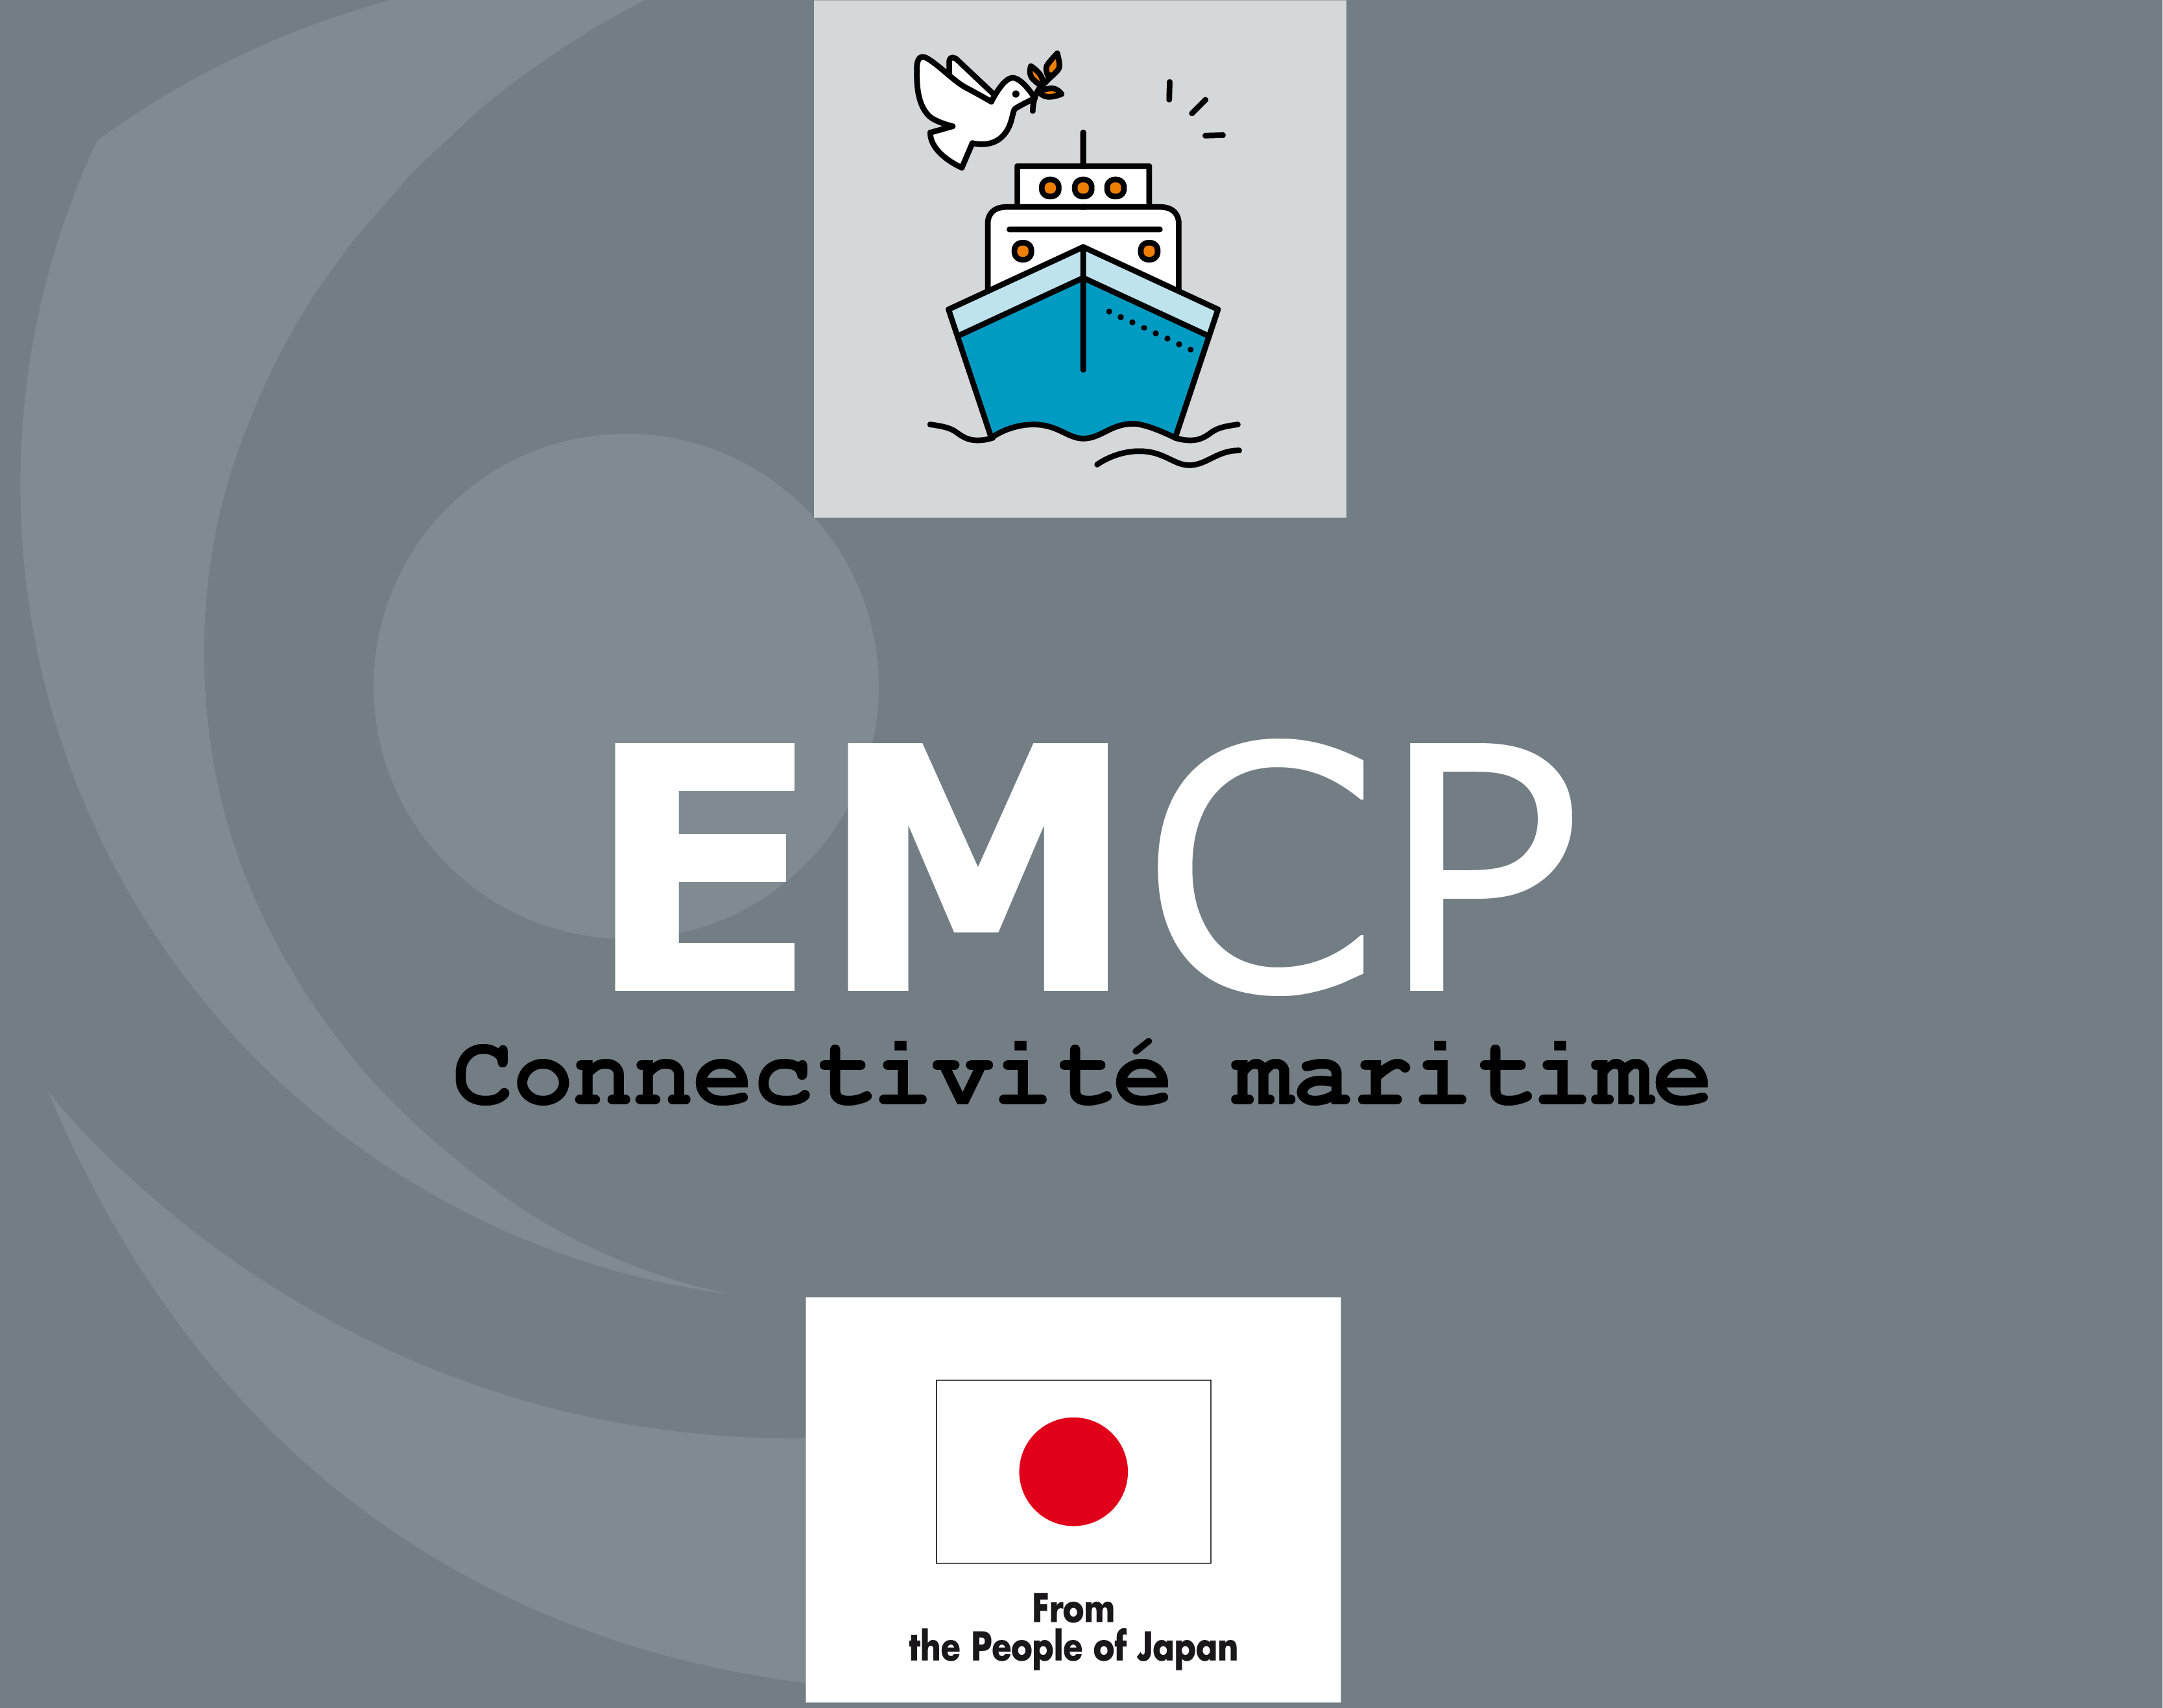 EMCP CONNECTIVITE MARITIME